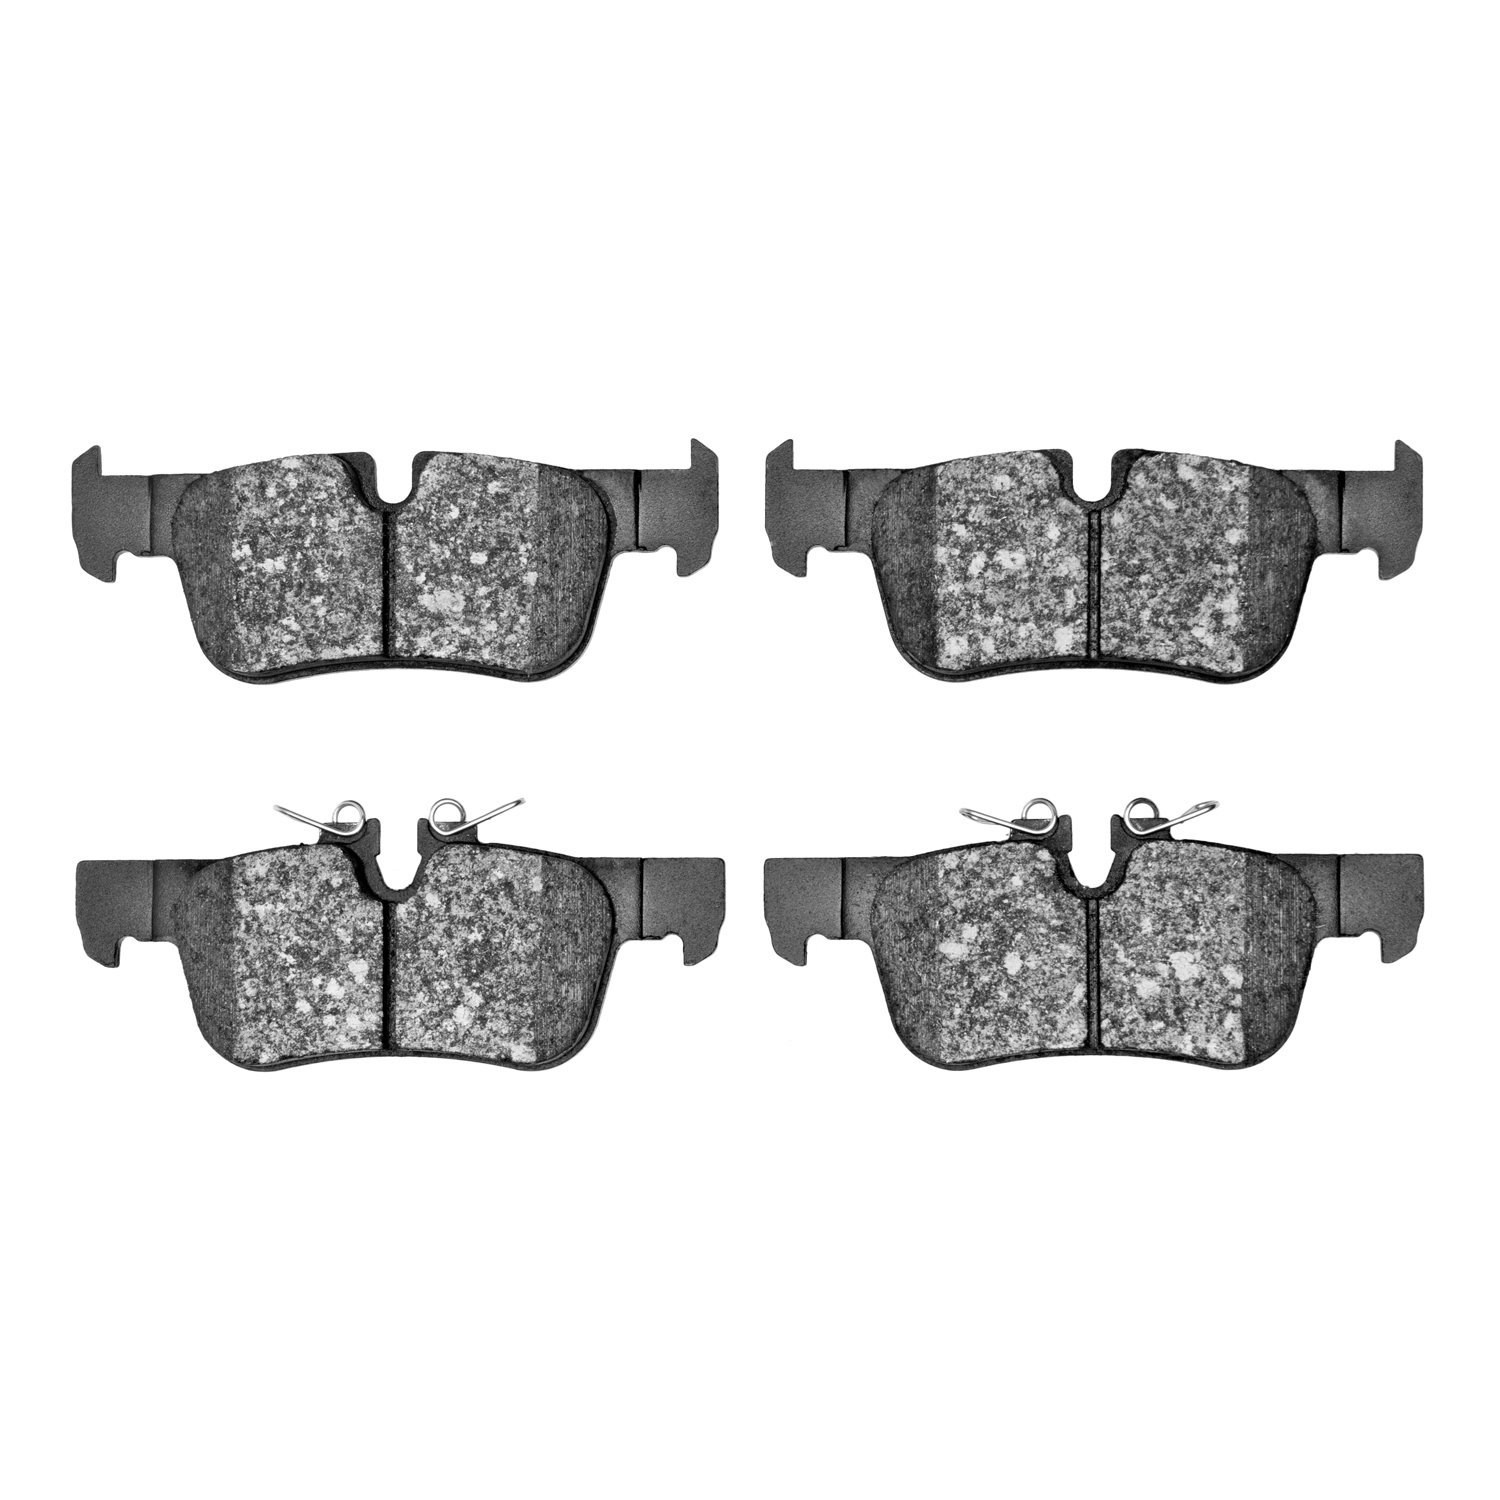 1552-1762-00 5000 Advanced Ceramic Brake Pads, 2015-2019 Multiple Makes/Models, Position: Rear